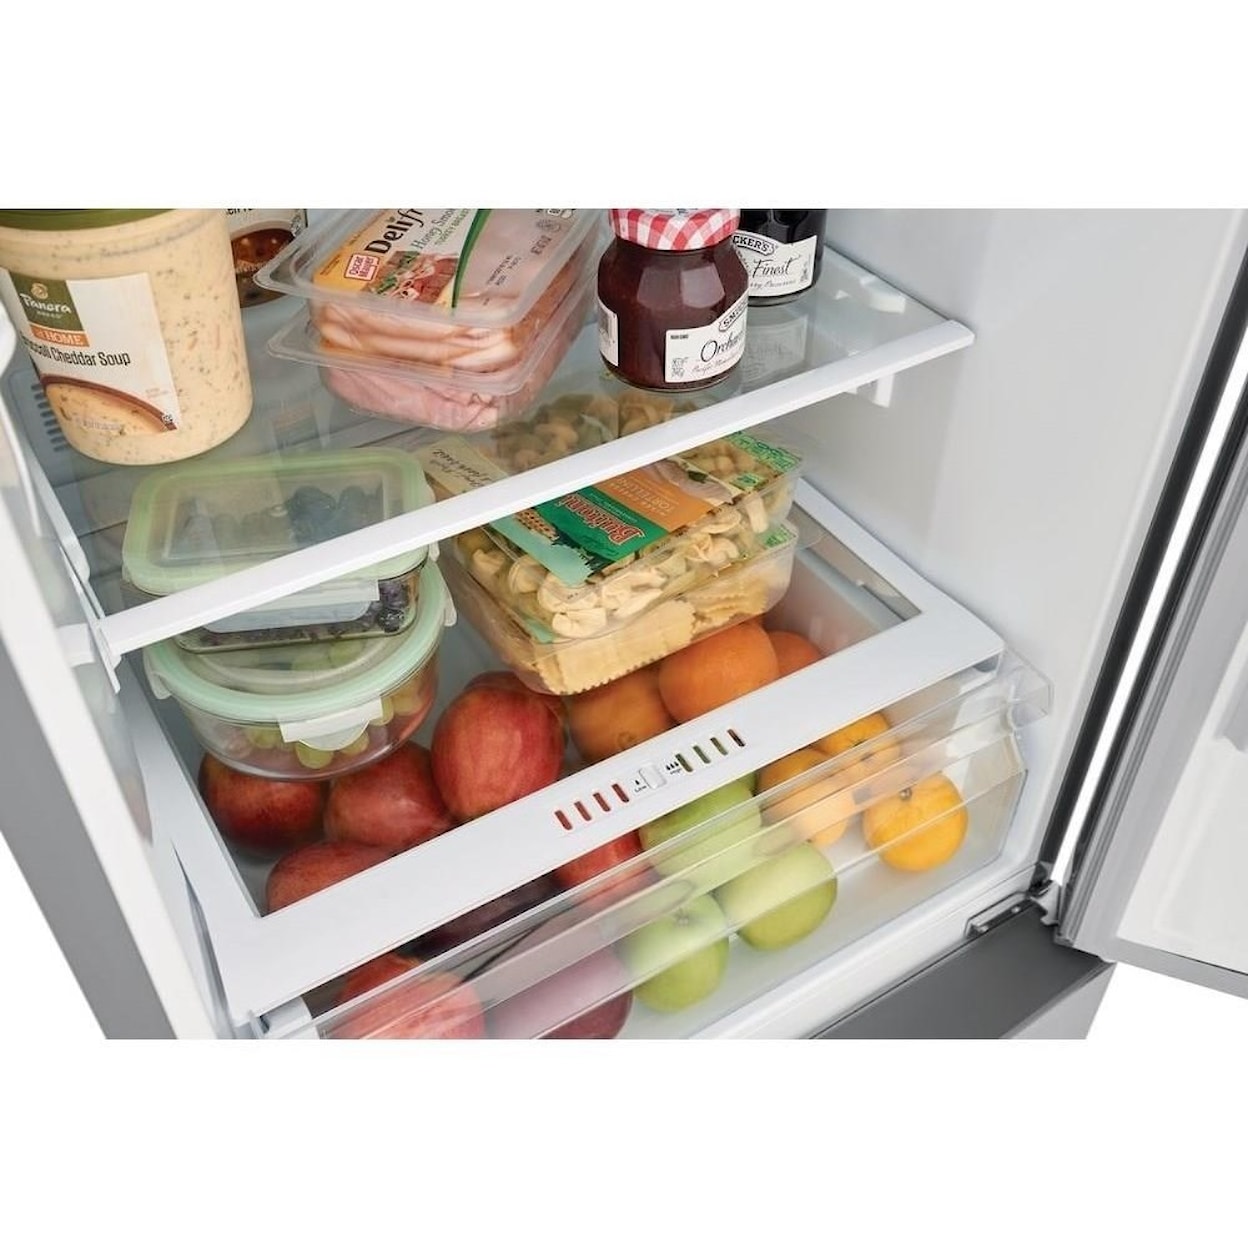 Electrolux Bottom-Freezer Refrigerator 11.8 Cu. Ft. Bottom Freezer Refrigerator